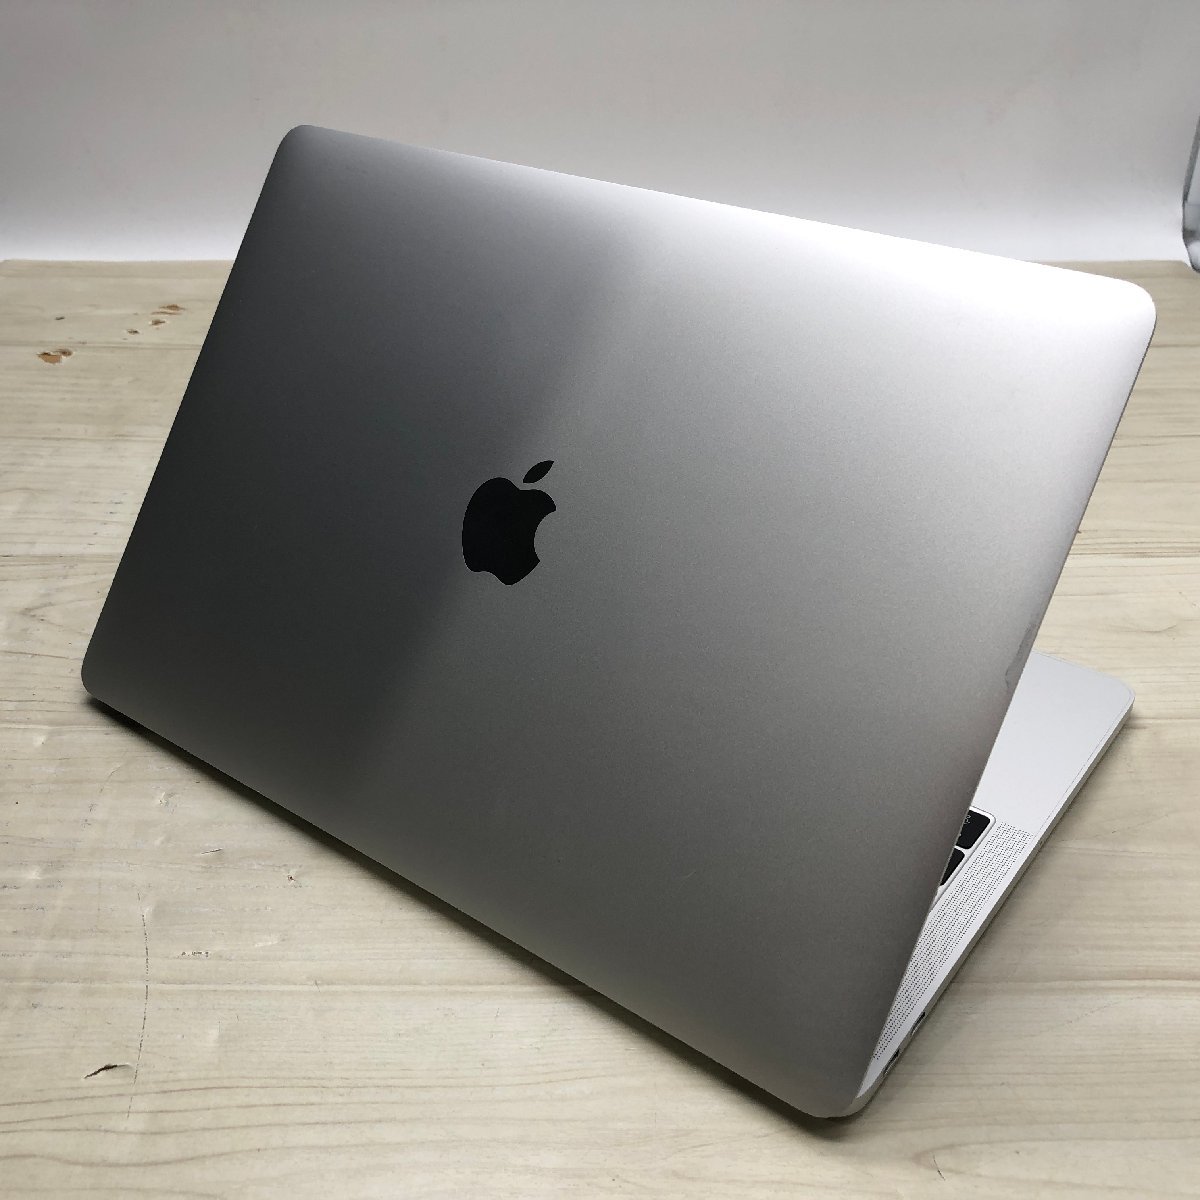 Apple MacBook Pro 13-inch 2017 Two Thunderbolt 3 Ports Core i5